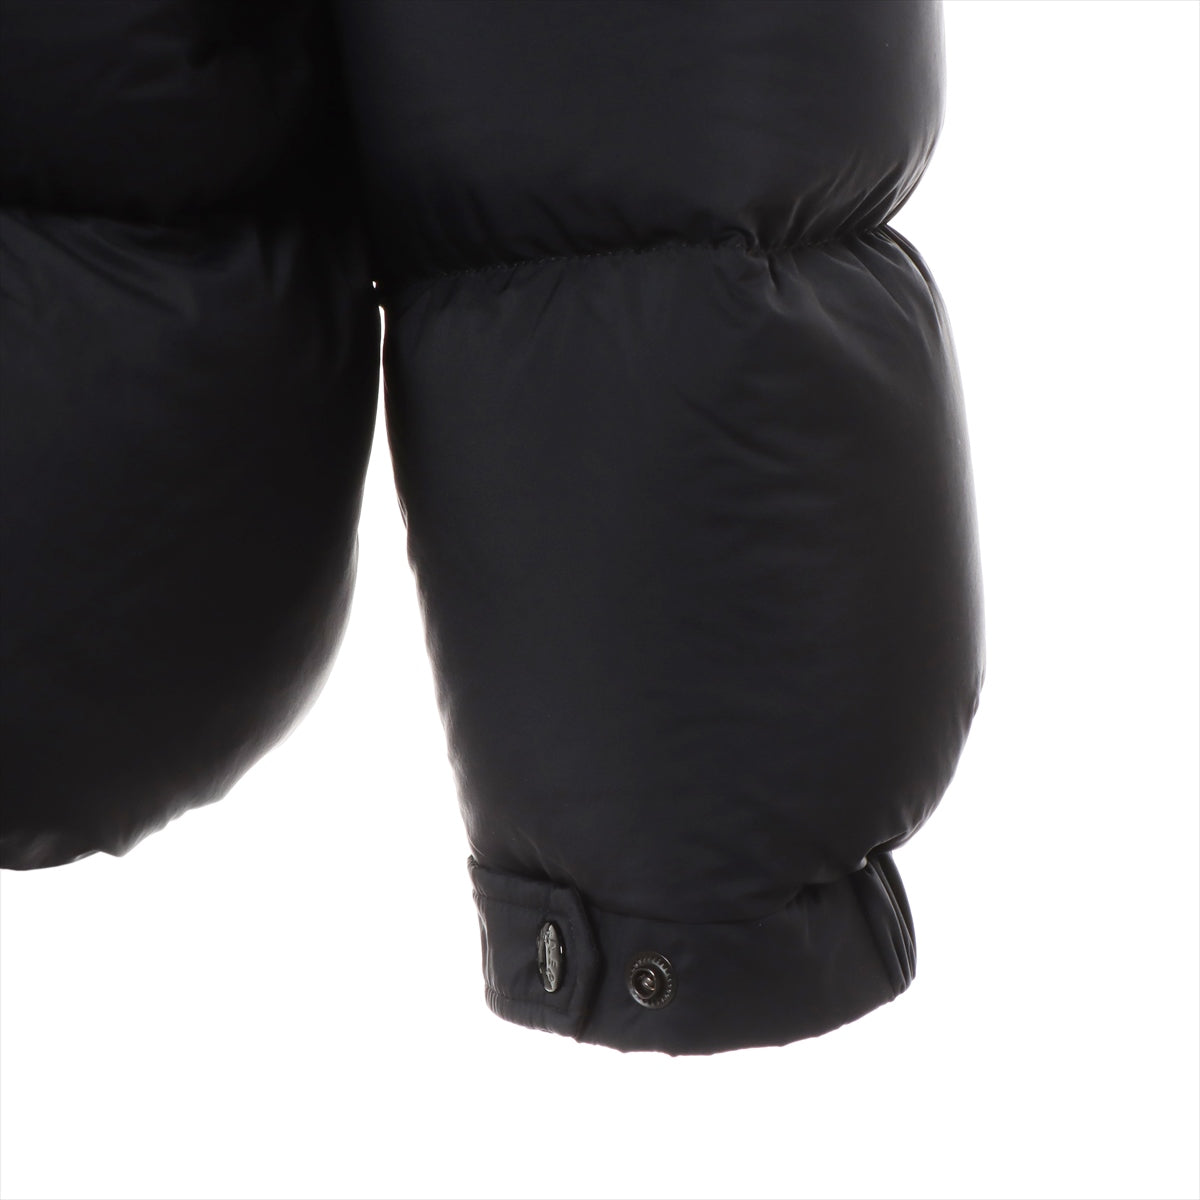 Moncler 21 years Cotton x polyester x nylon Down jacket 7 Men's Black  WARGNIER Detachable hood